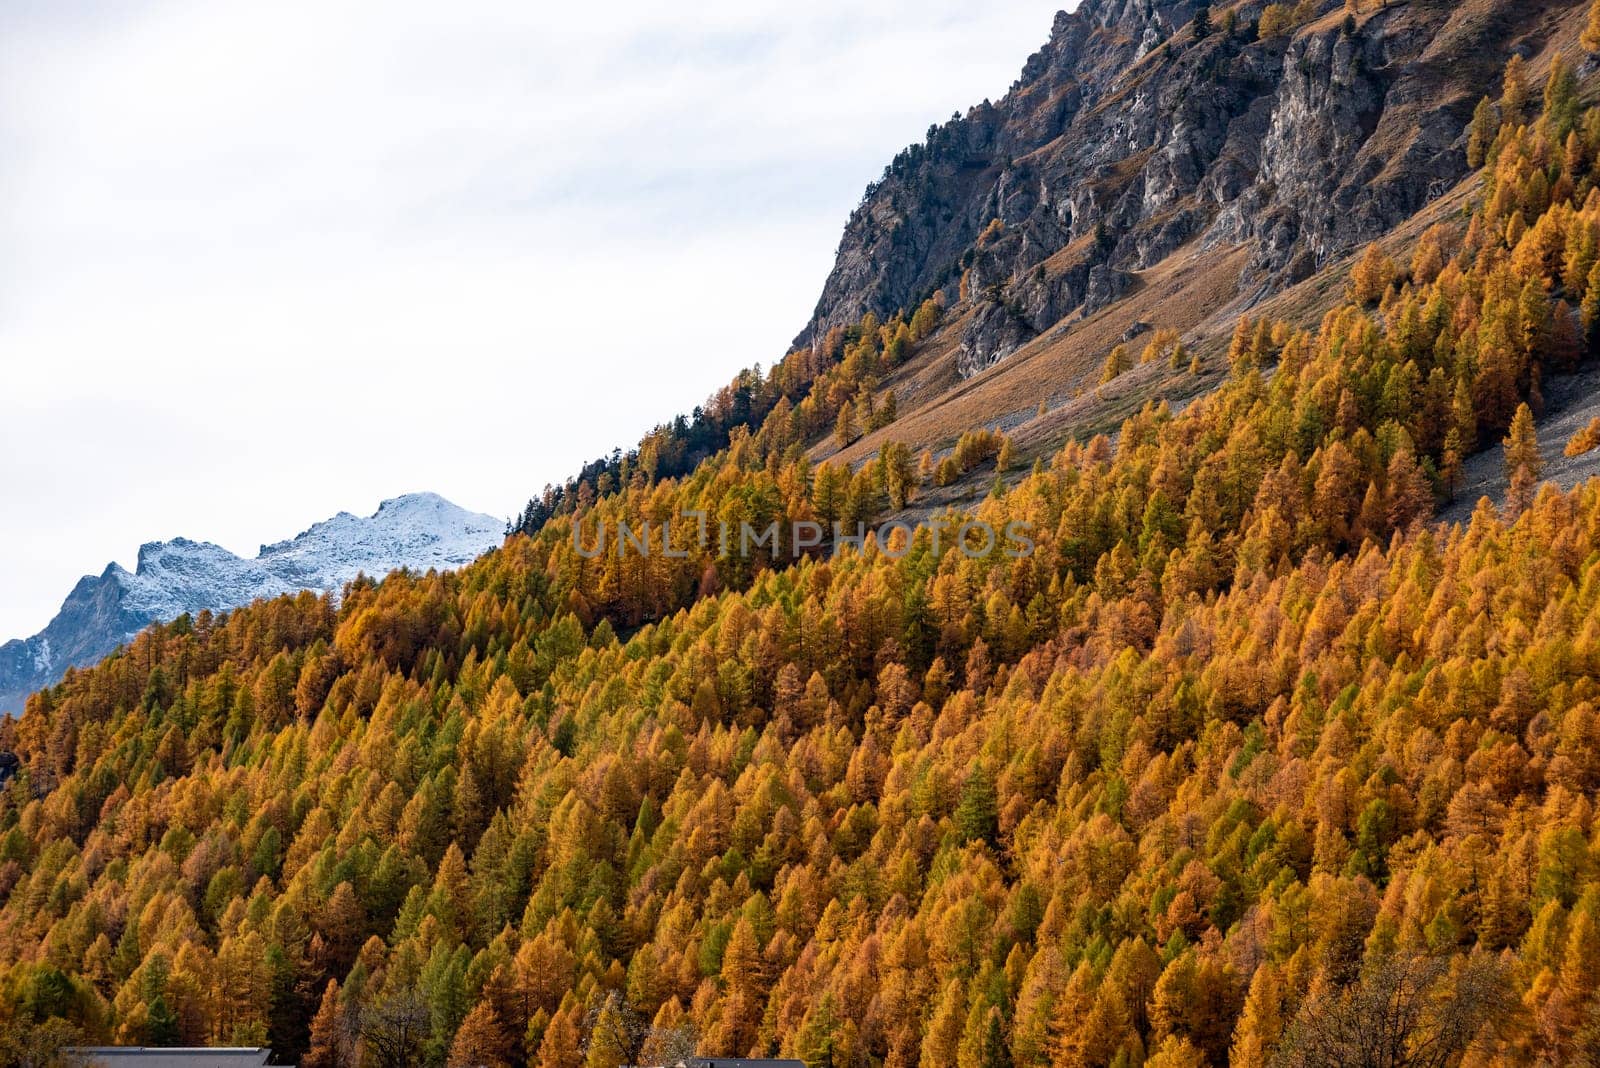 Scenic autumn landscape at lake Silvaplana near St. Moritz by imagoDens